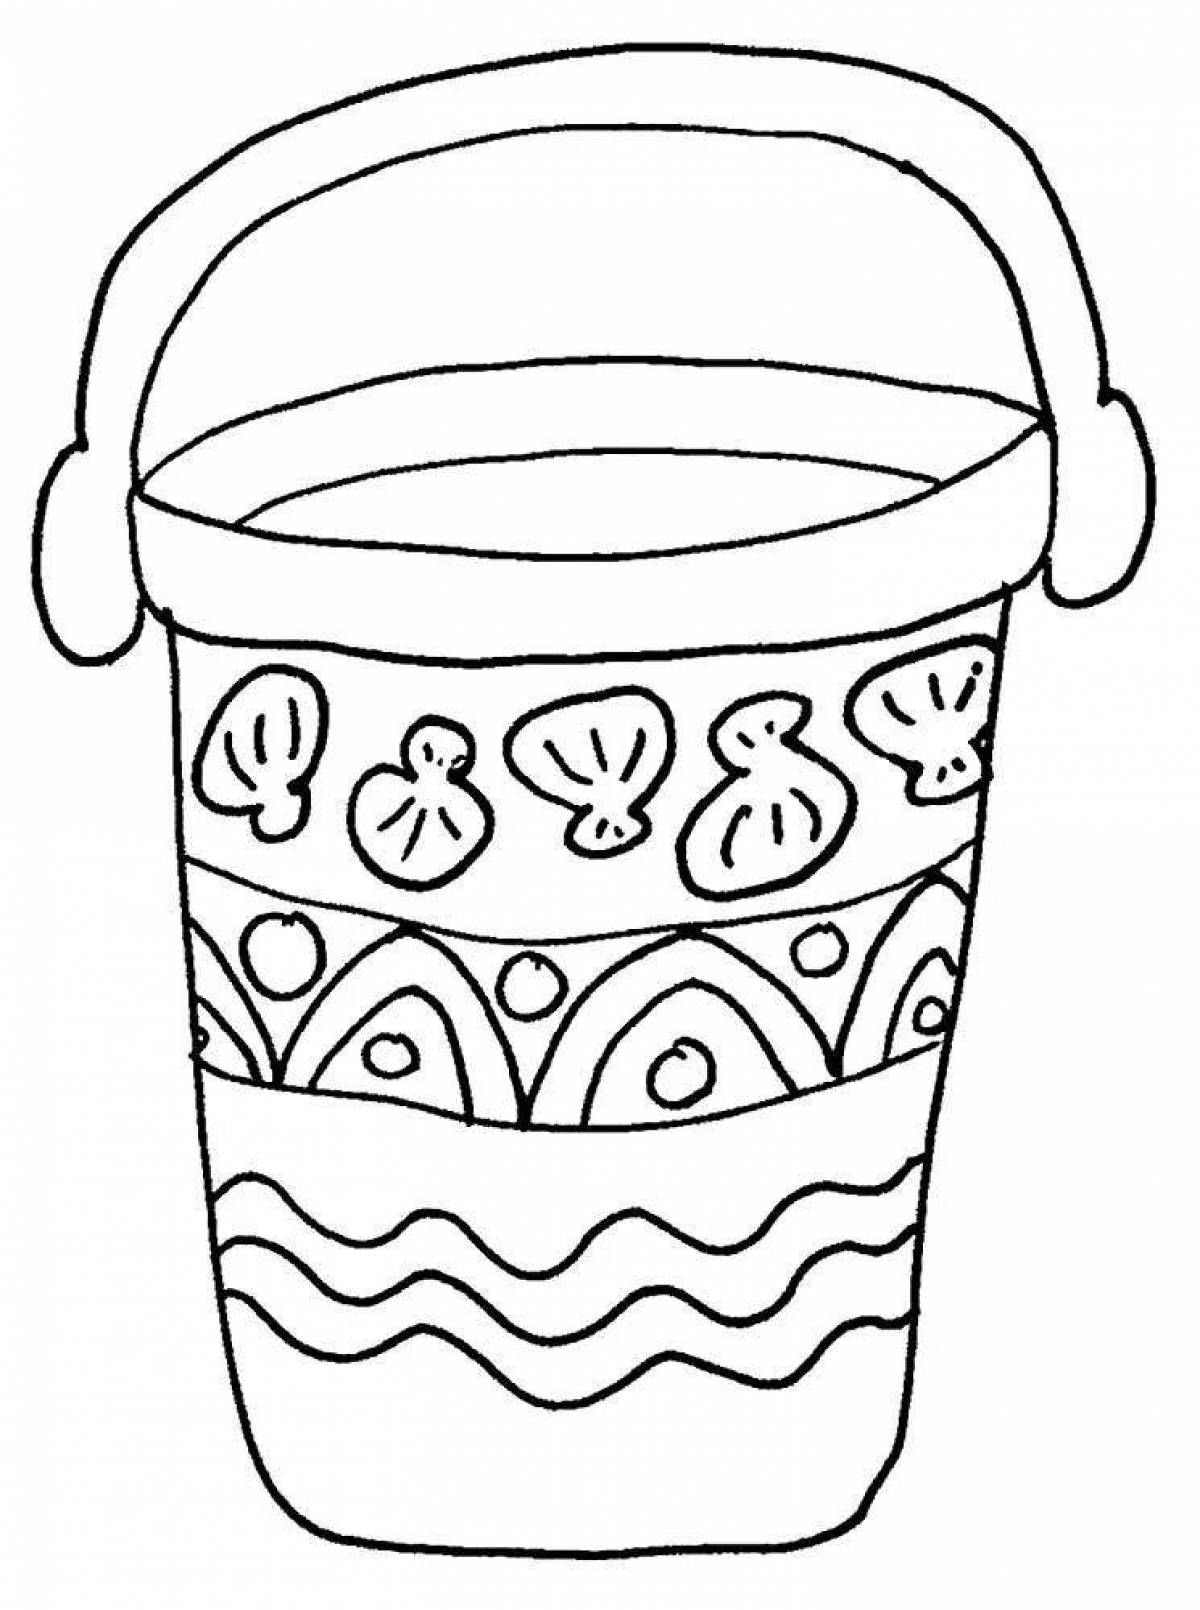 Rampant bucket coloring book for preschoolers